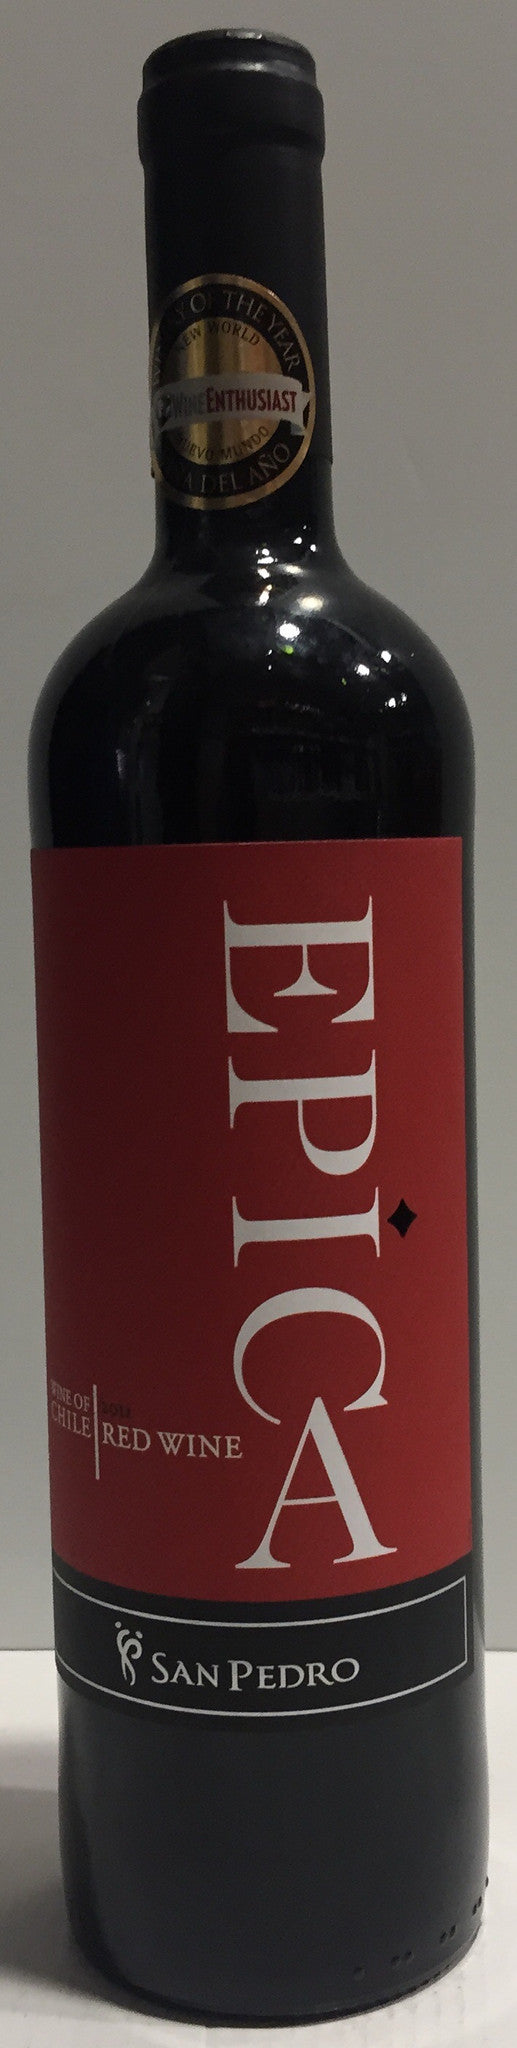 EPICA RED WINE 2011 - Bk Wine Depot Corp